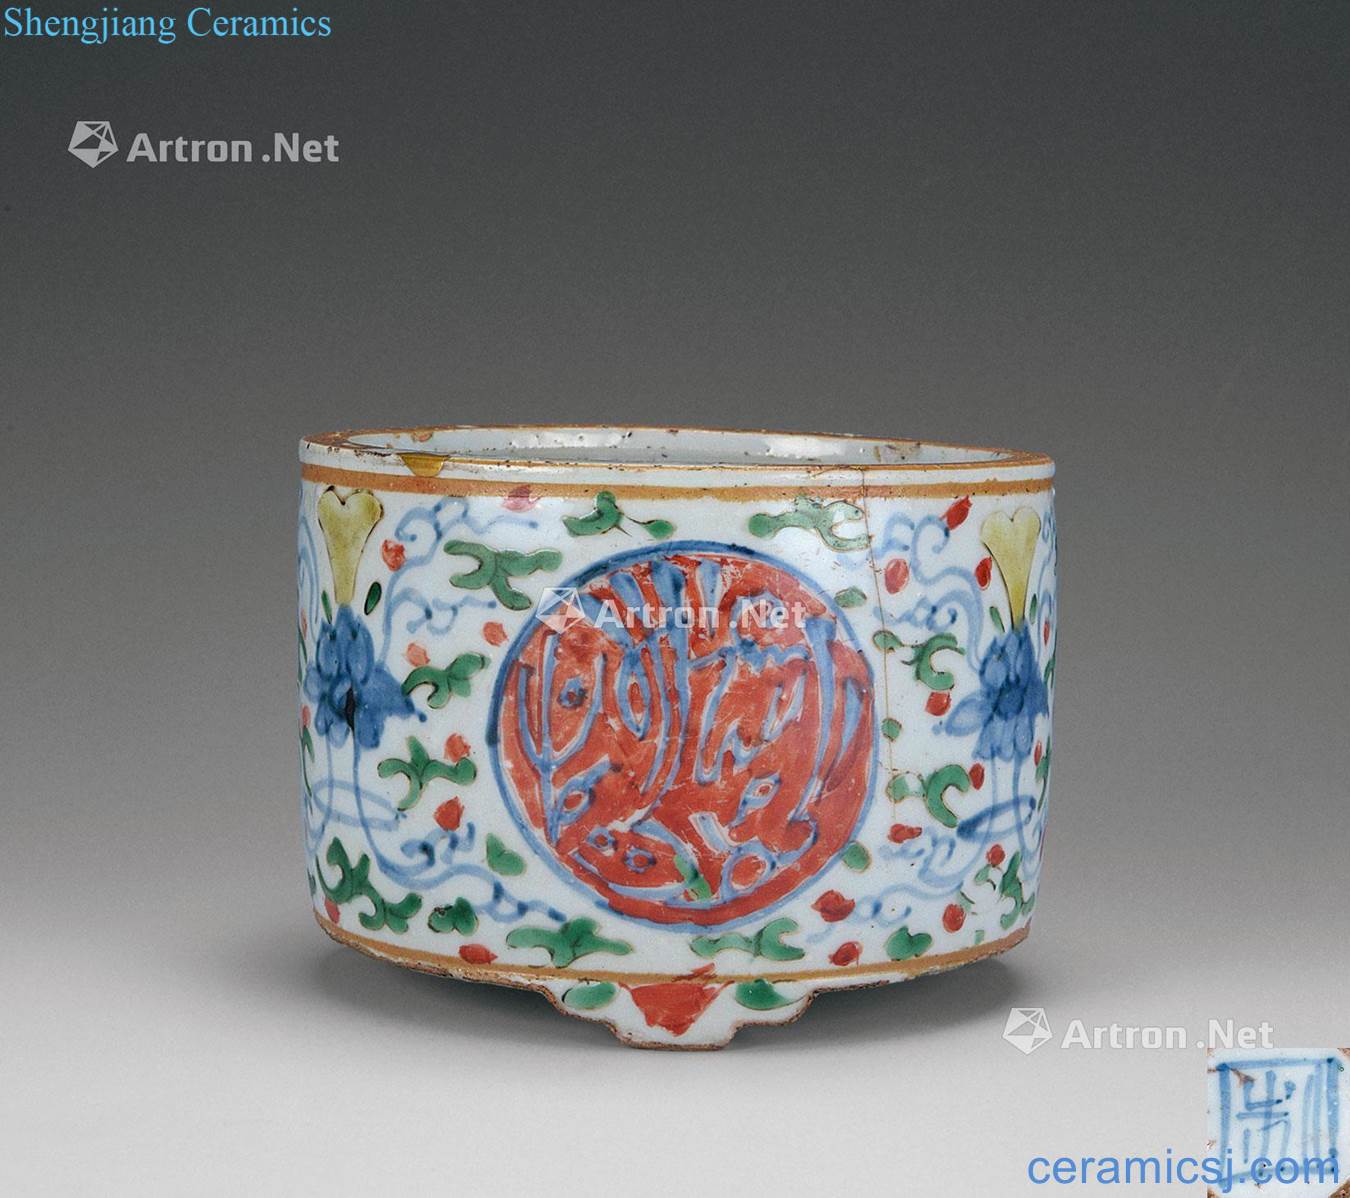 Ming dynasty (1368-1644), colorful Sanskrit wen incense burner with three legs